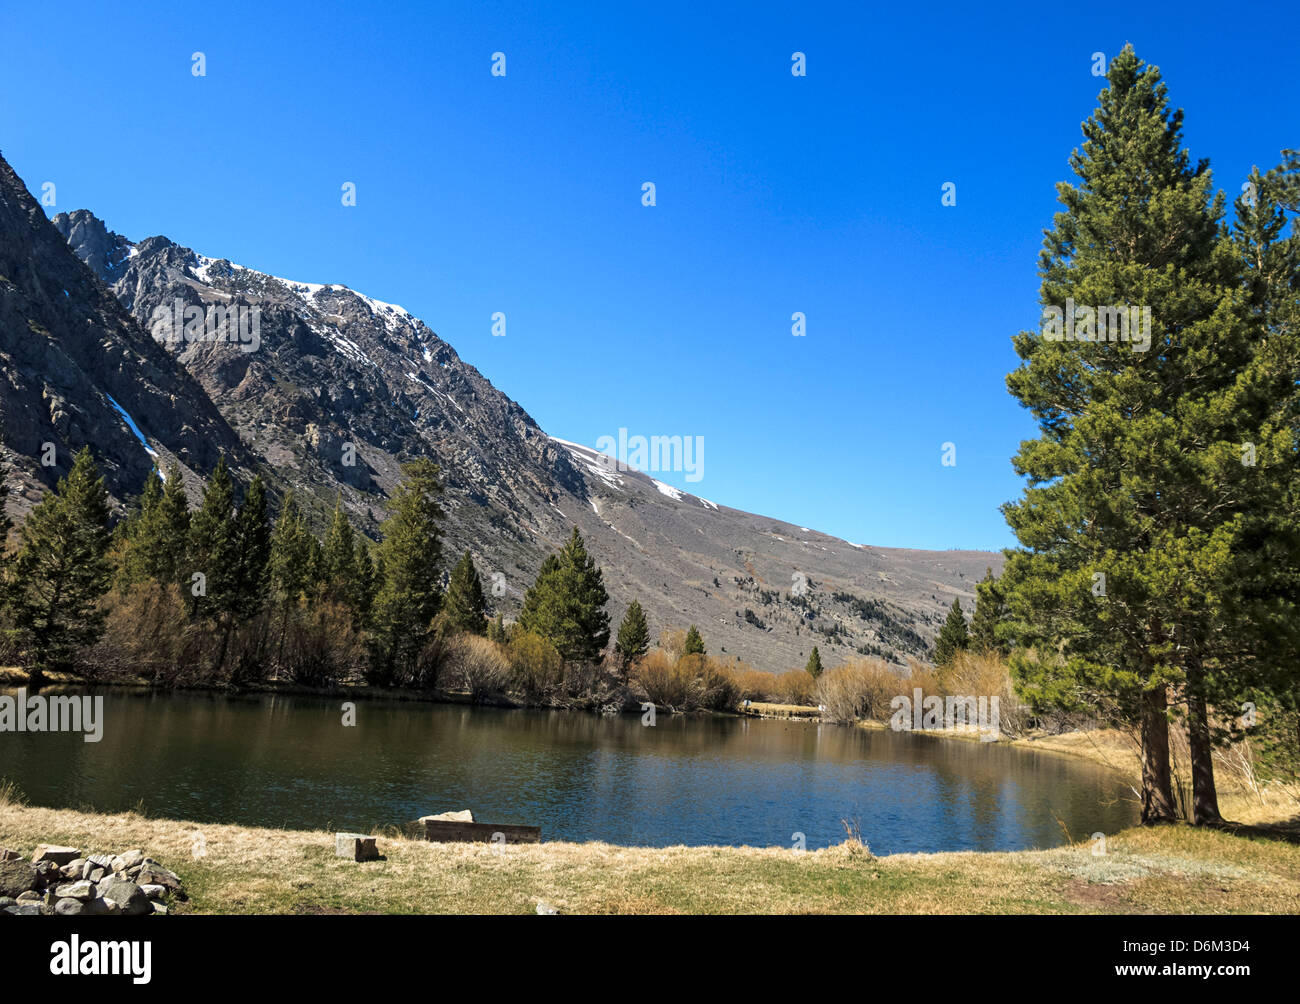 Black's Pond in town of June Lake near Yosemite National Park where final scene of Oblivion movie was filmed. Stock Photo